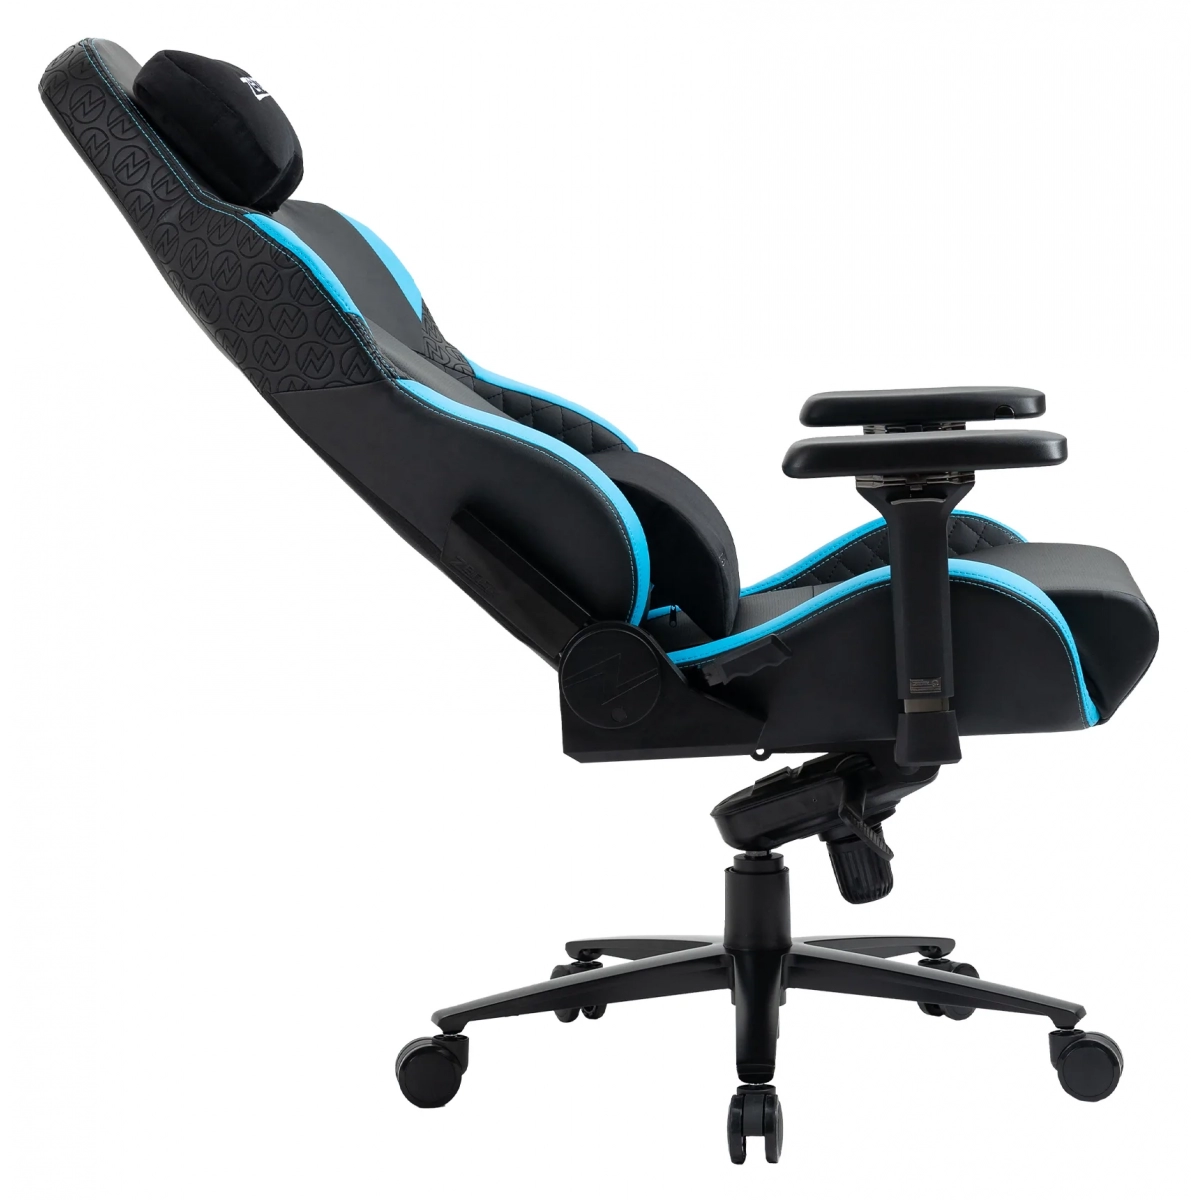 Zenox Jupiter-MK2 Gaming Chair (Leather/Sky Blue)